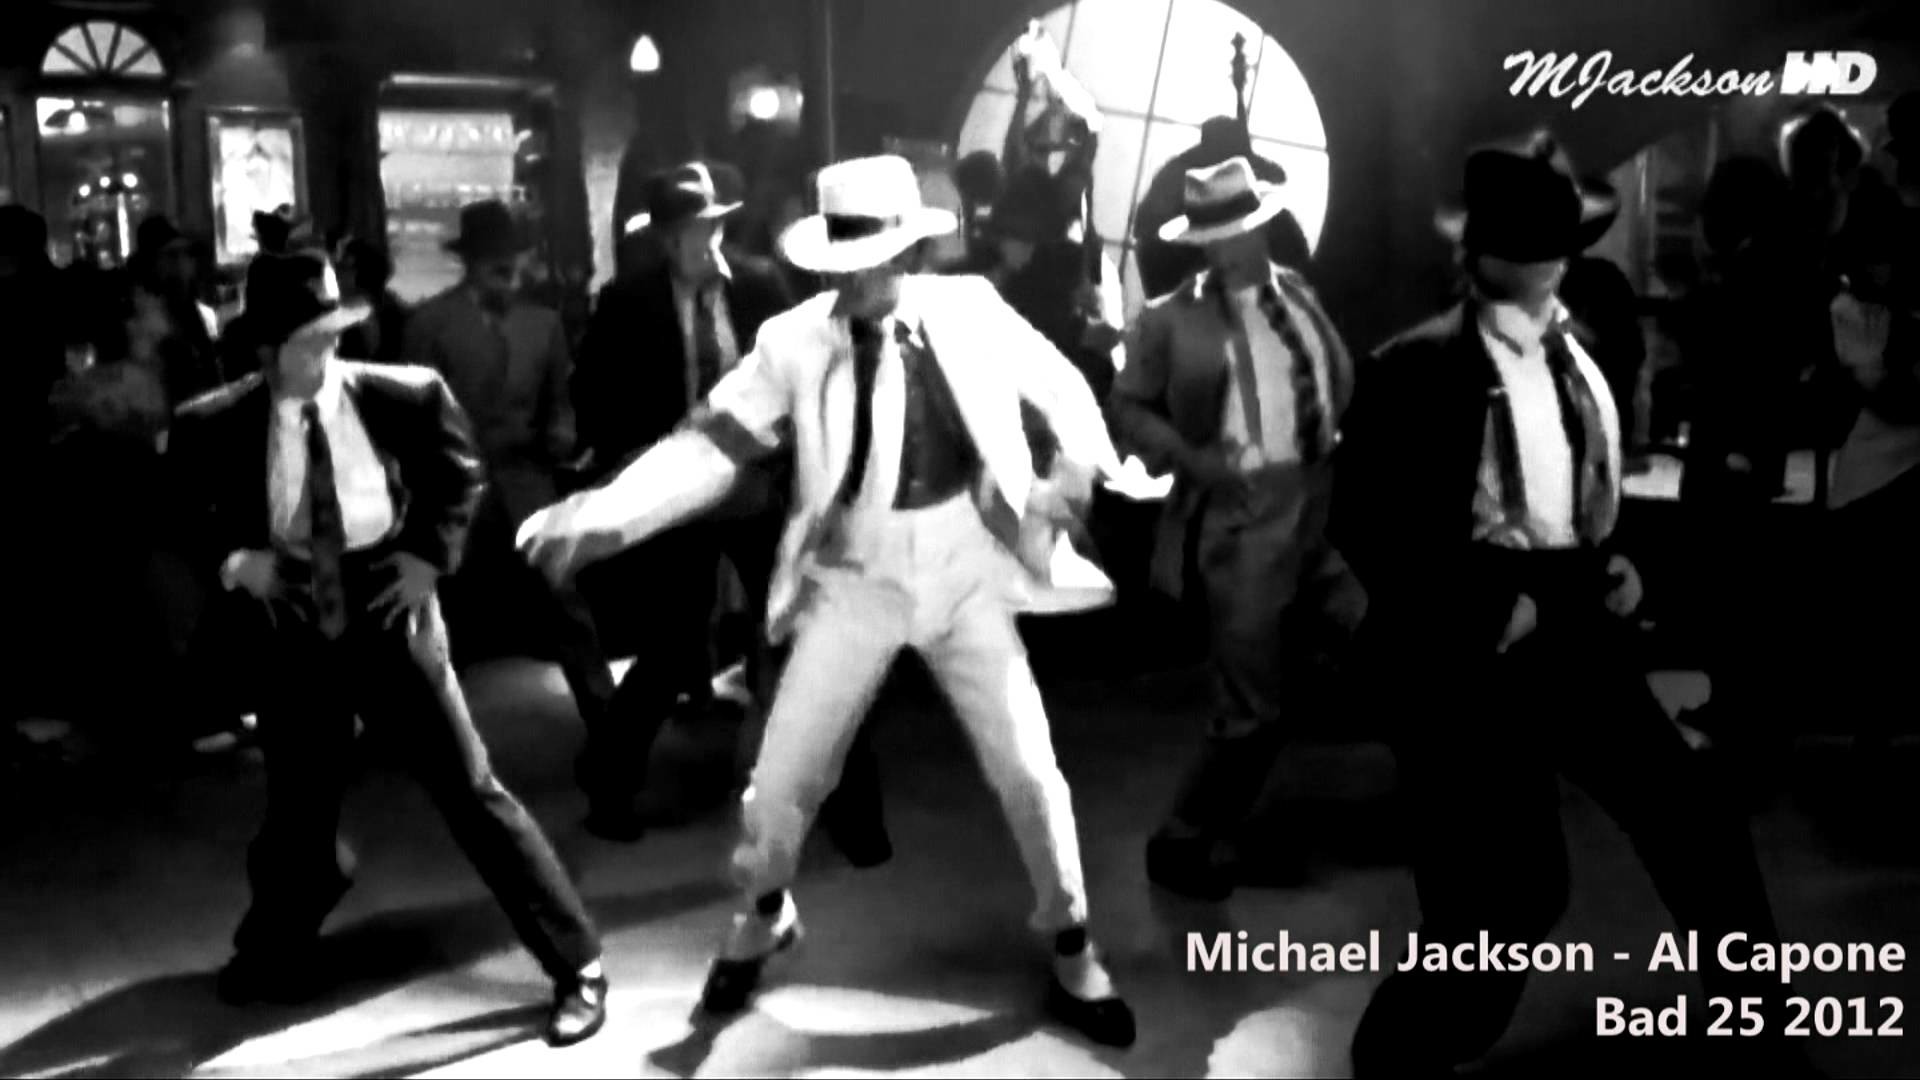 1920x1080 Michael Jackson - Al Capone 1987 - BAD 25 2012 - Music Video JCC007 Edit -  YouTube